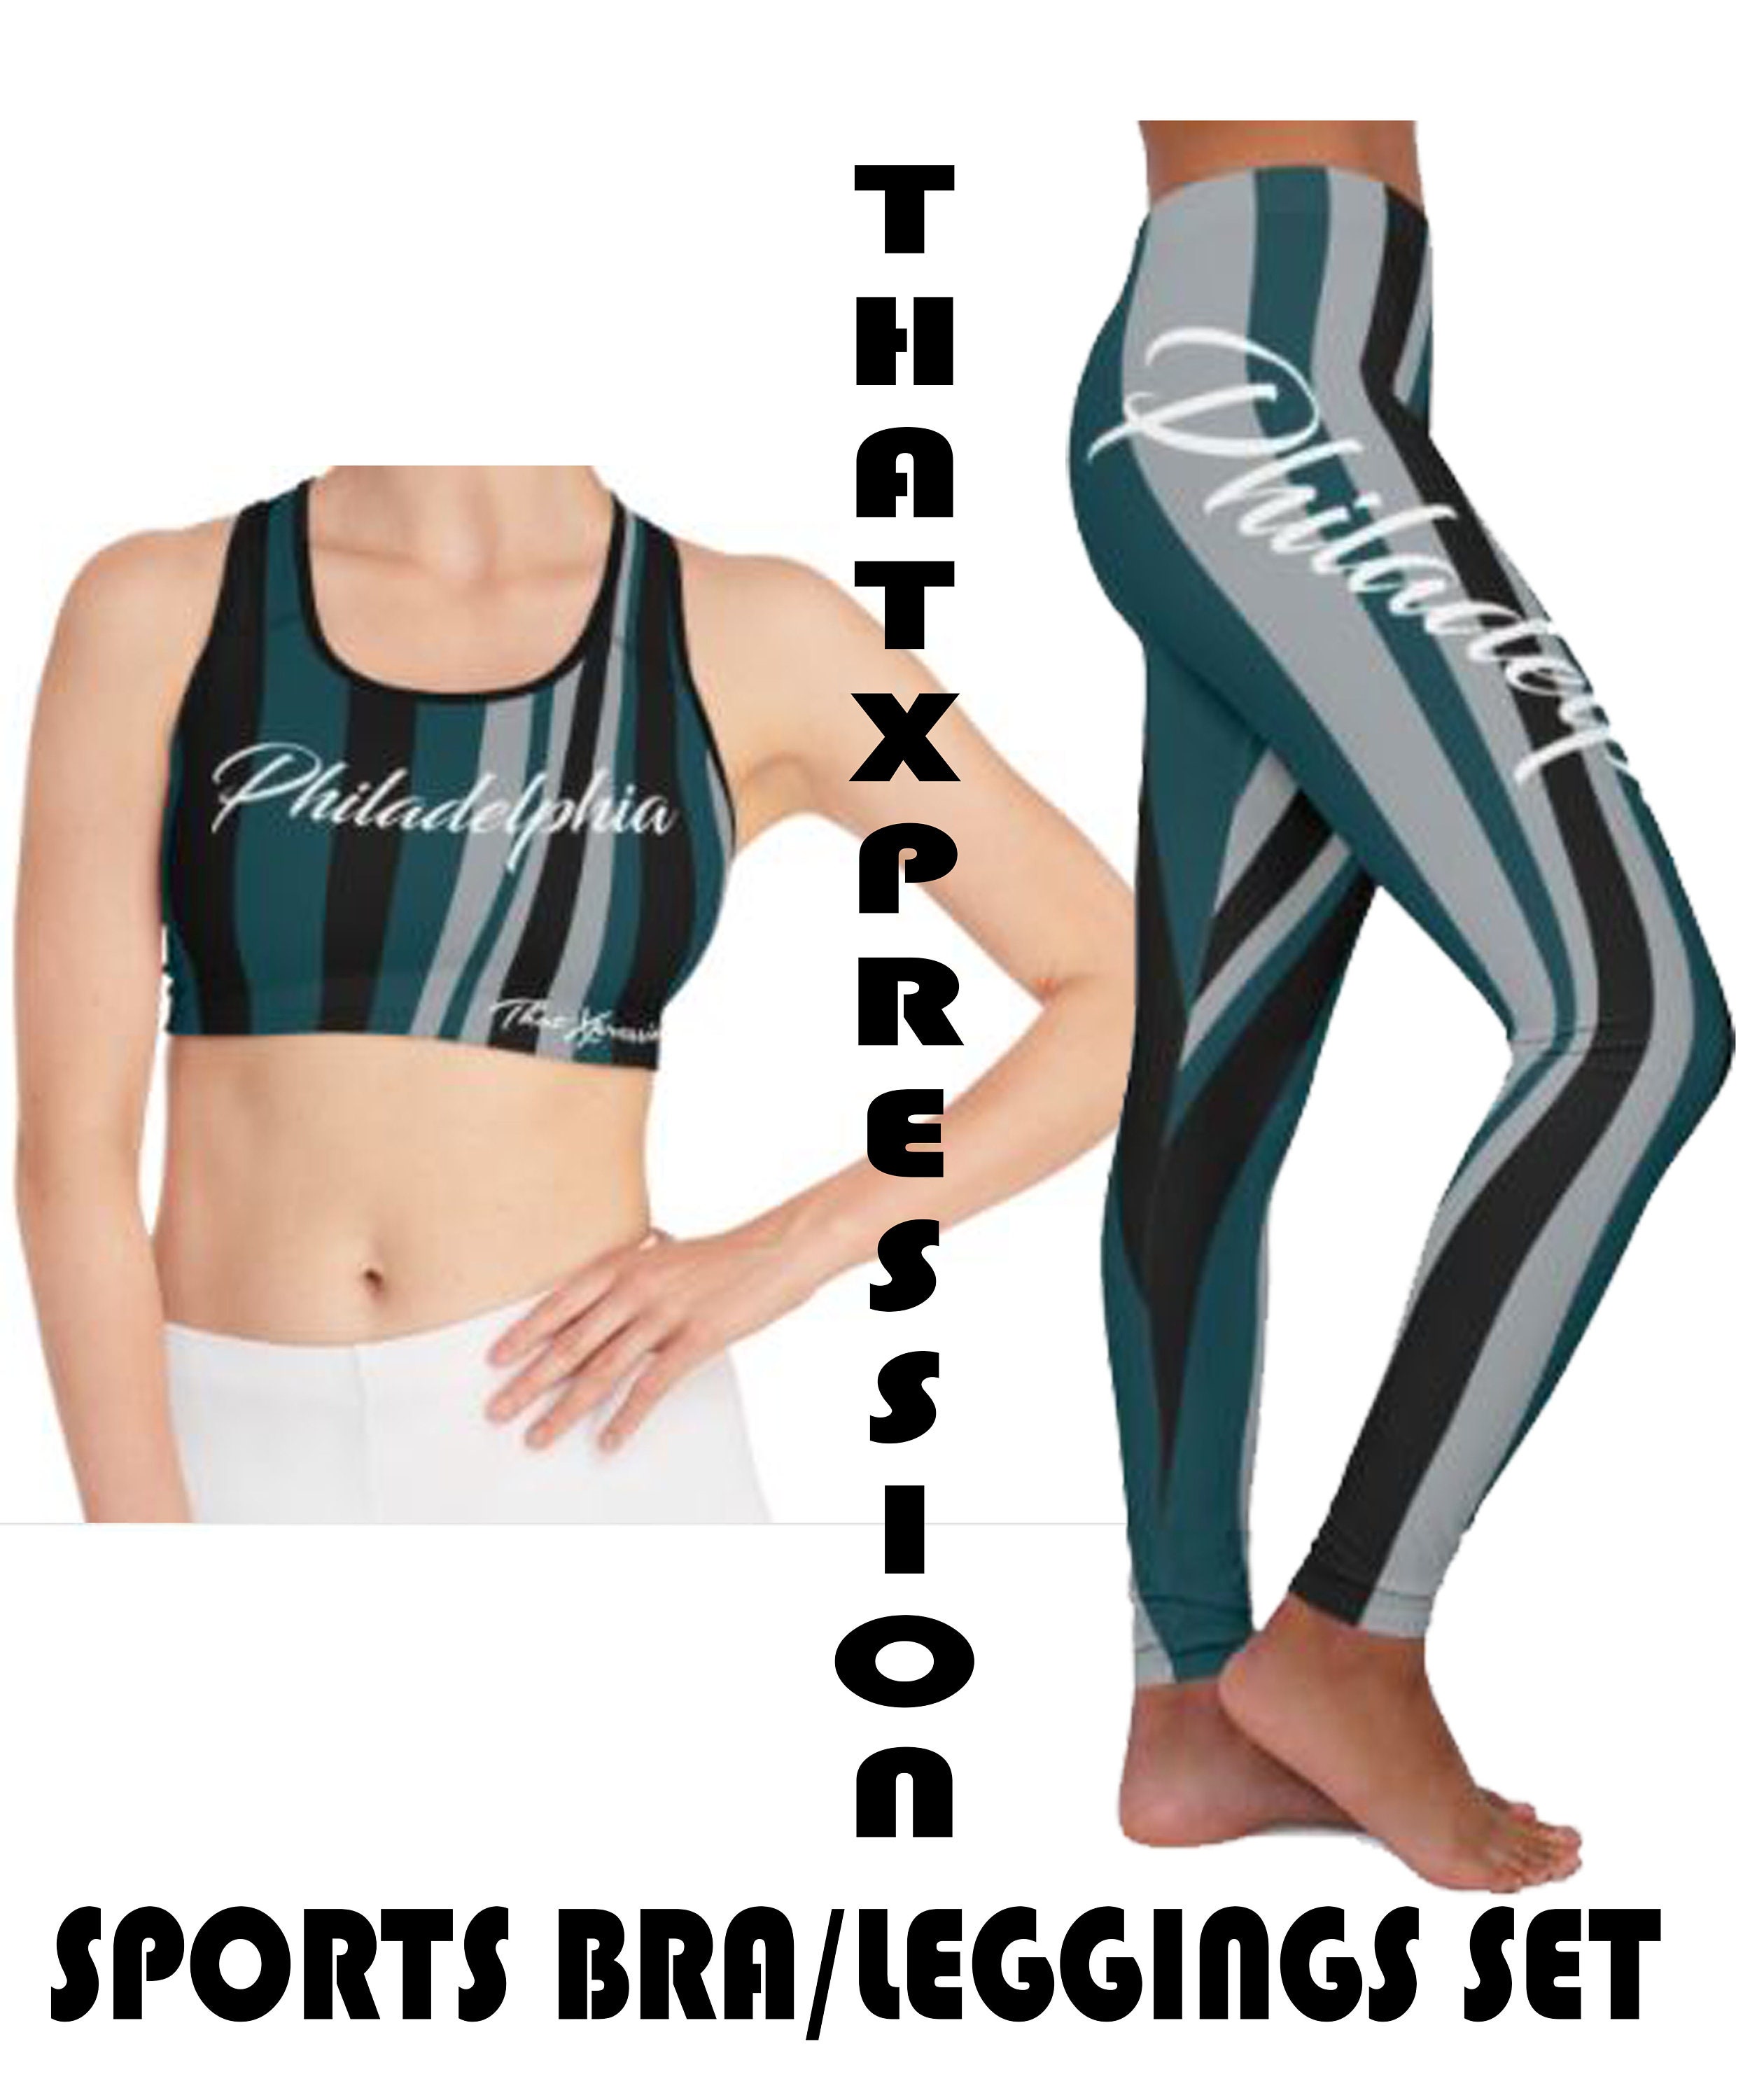 Thatxpression Fashion Philadelphia Leggings & Sports Bra Set 